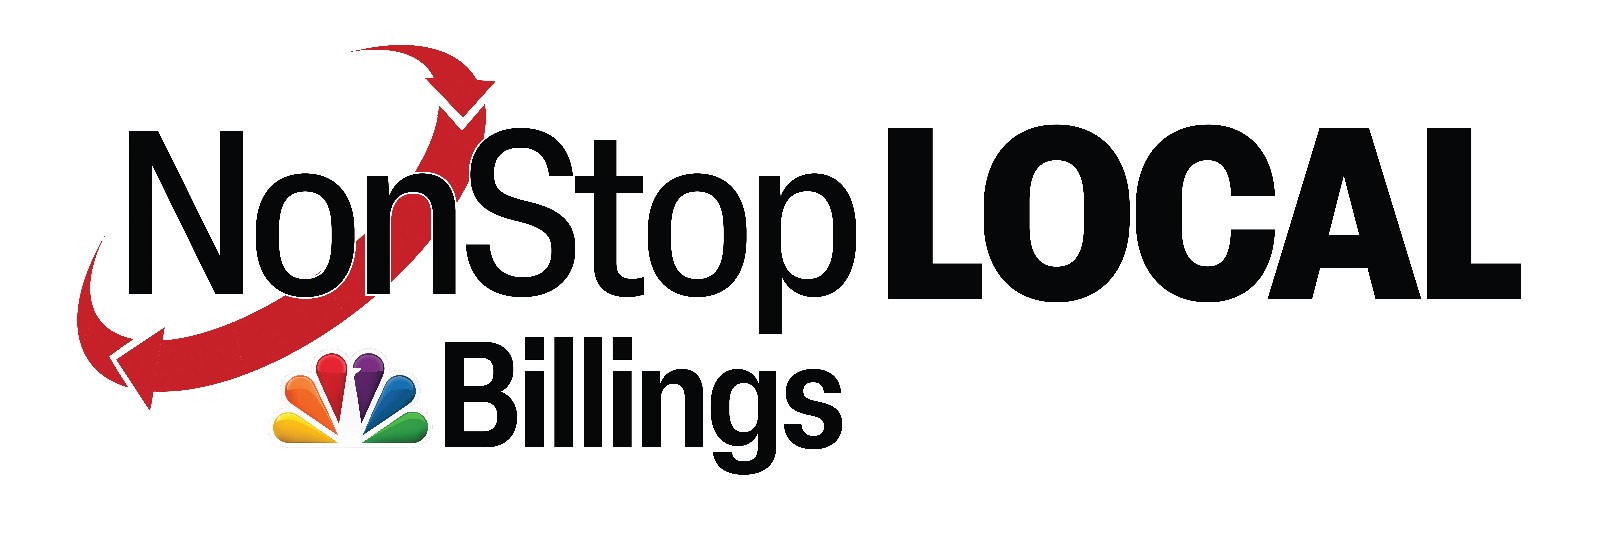 NonStop LOCAL Bliling nbc news logo